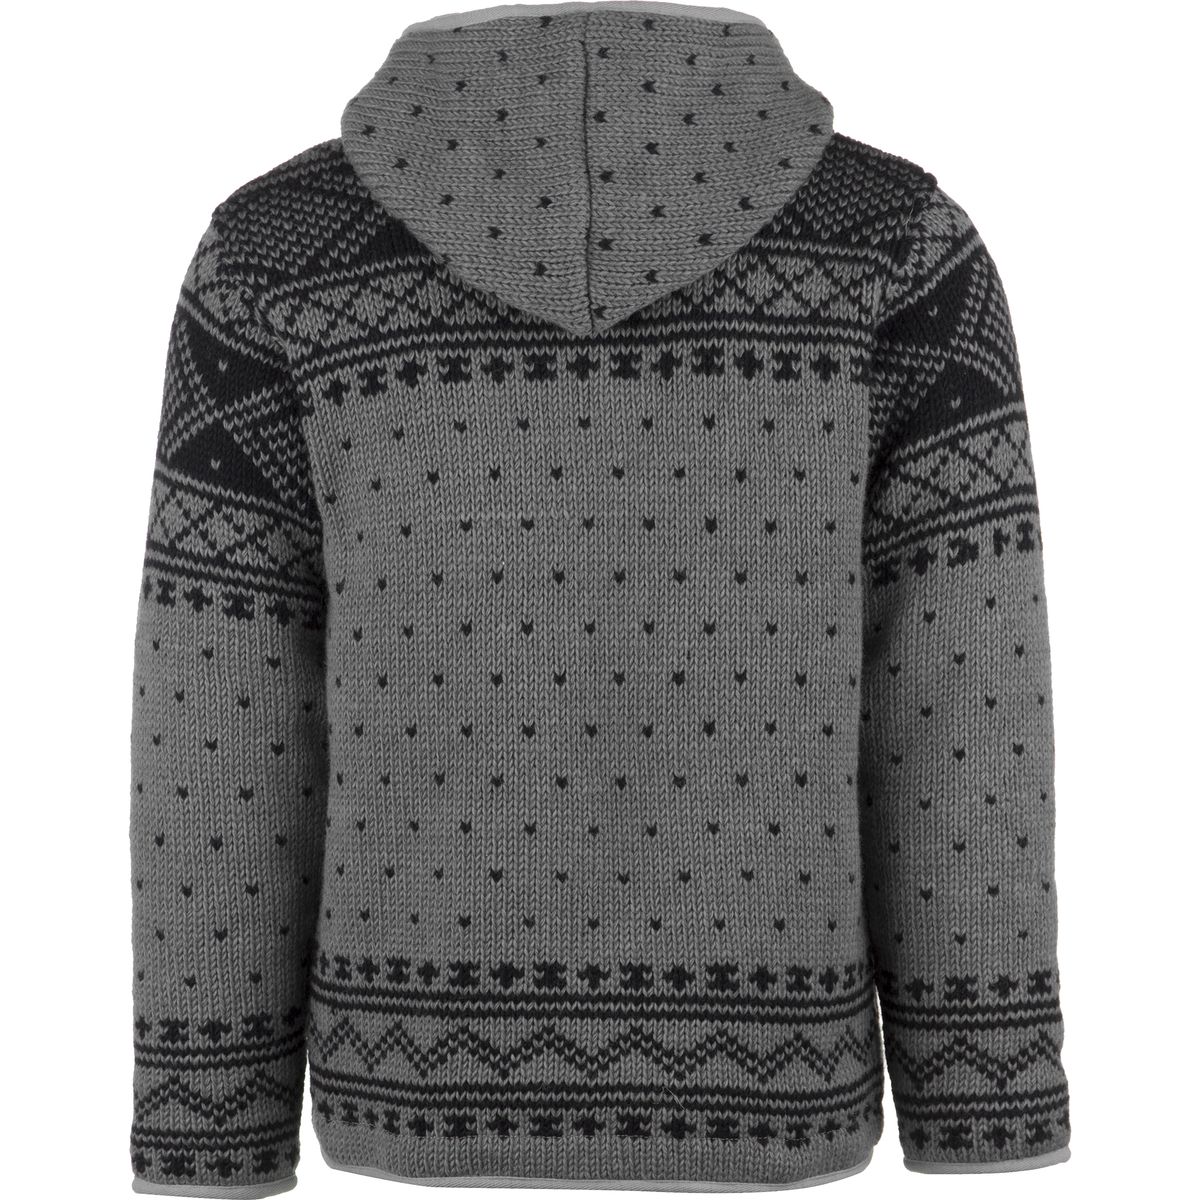 Lost Horizons Zurich Sweater - Men's - Clothing